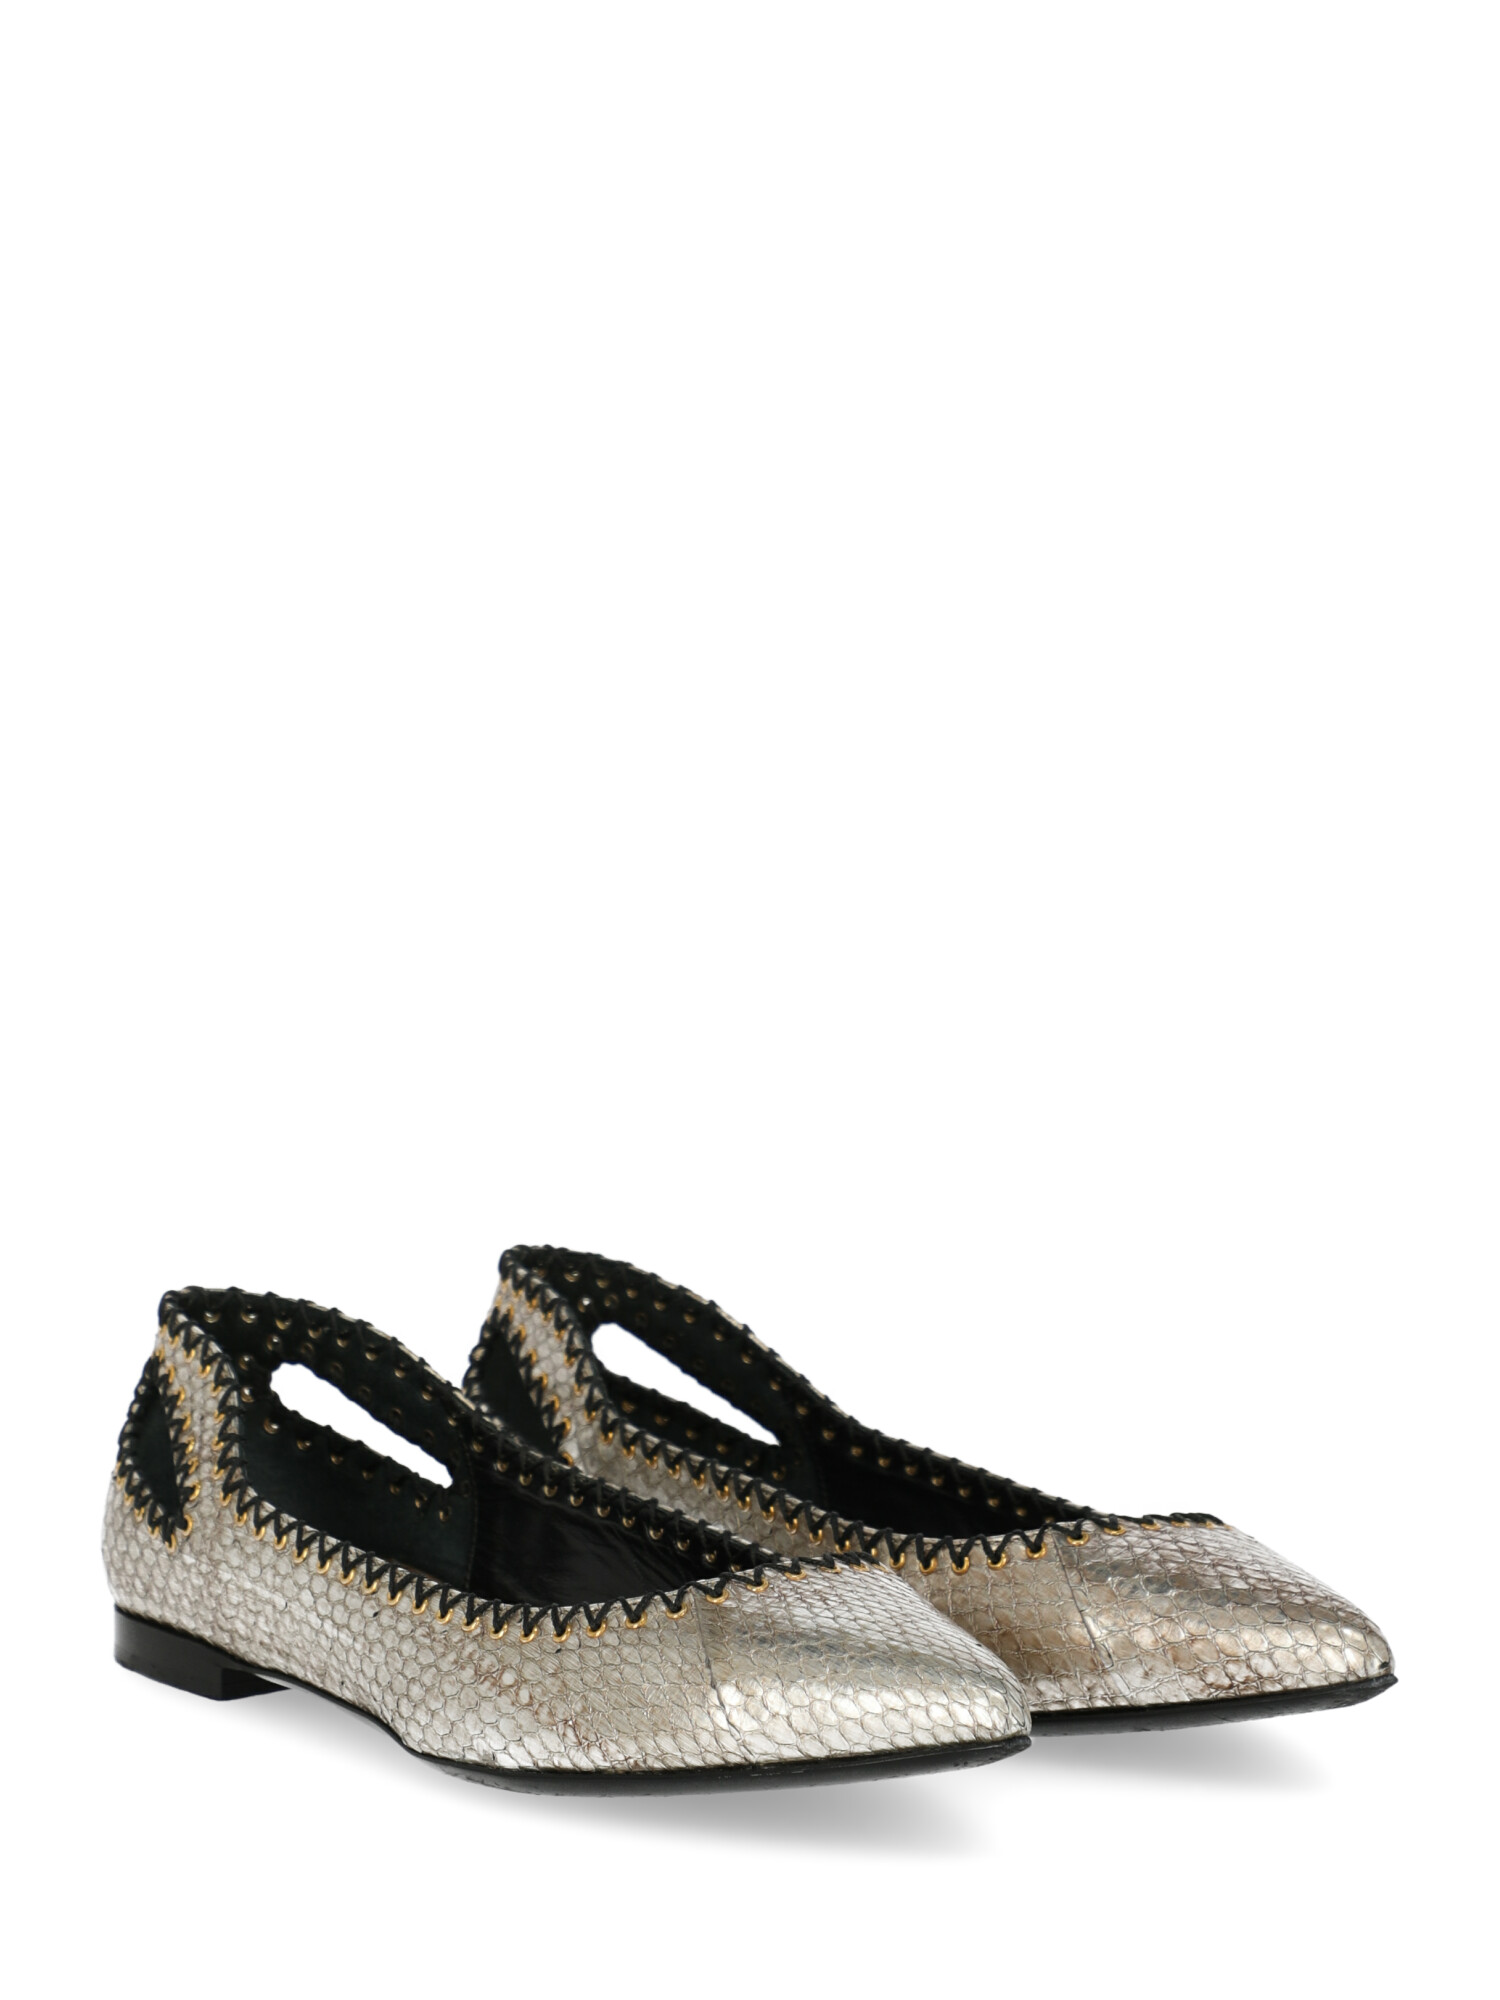 Roberto Cavalli Special Price Women Shoes Ballet flats Silver IT 37 | eBay